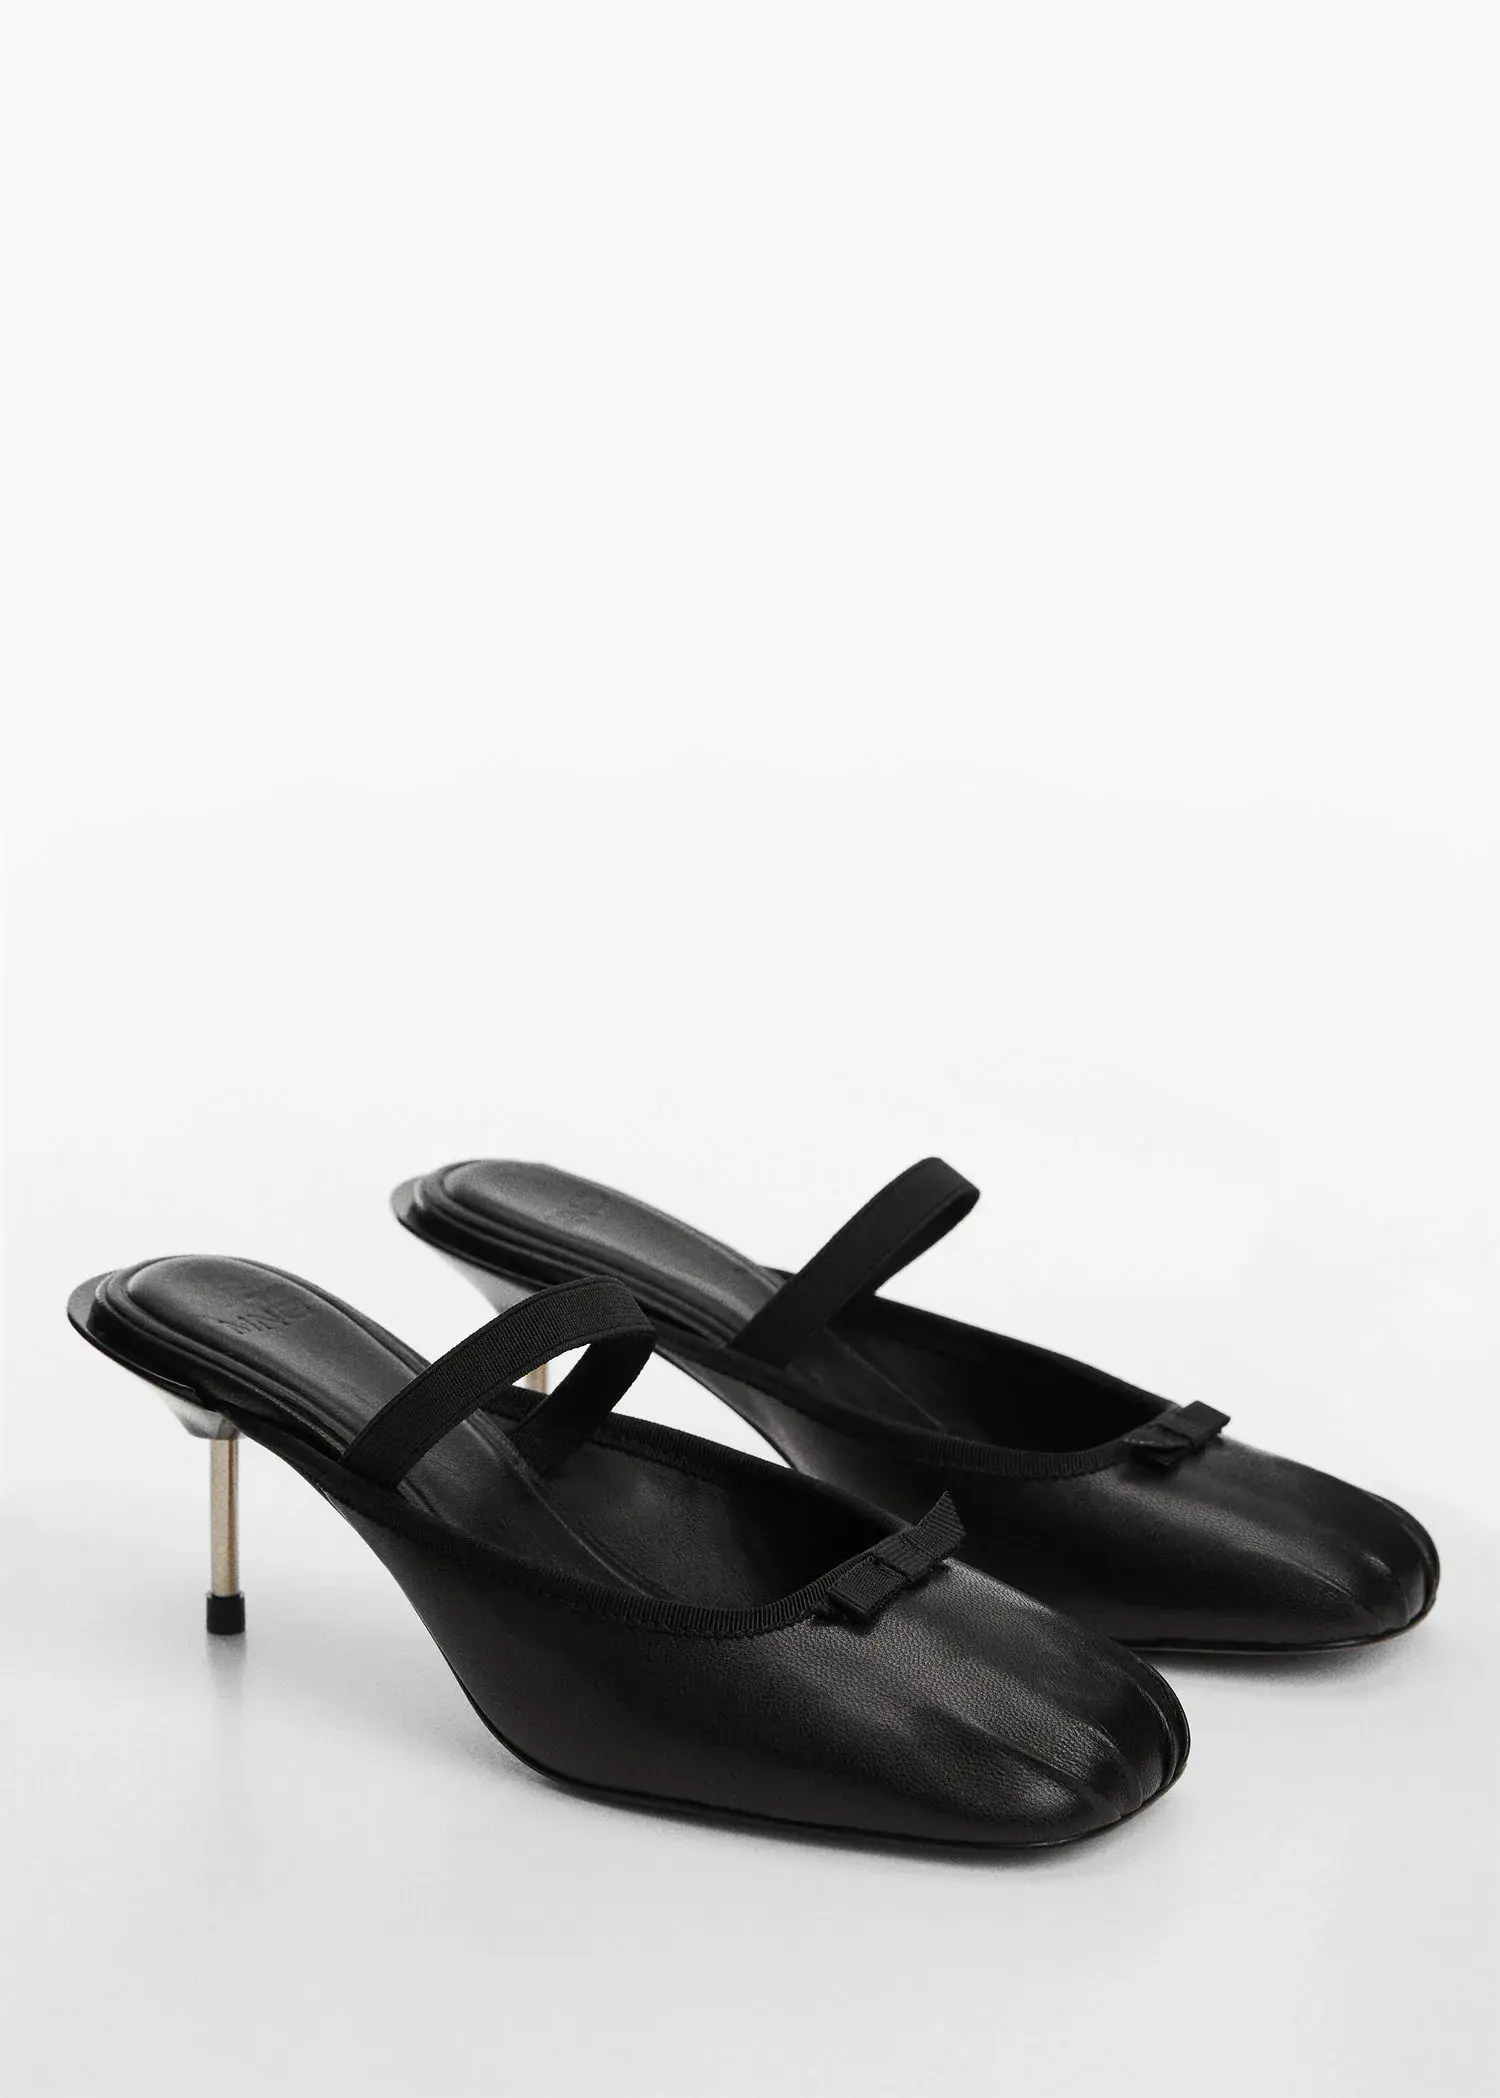 Mango Leather ballerinas with metallic heel. 2